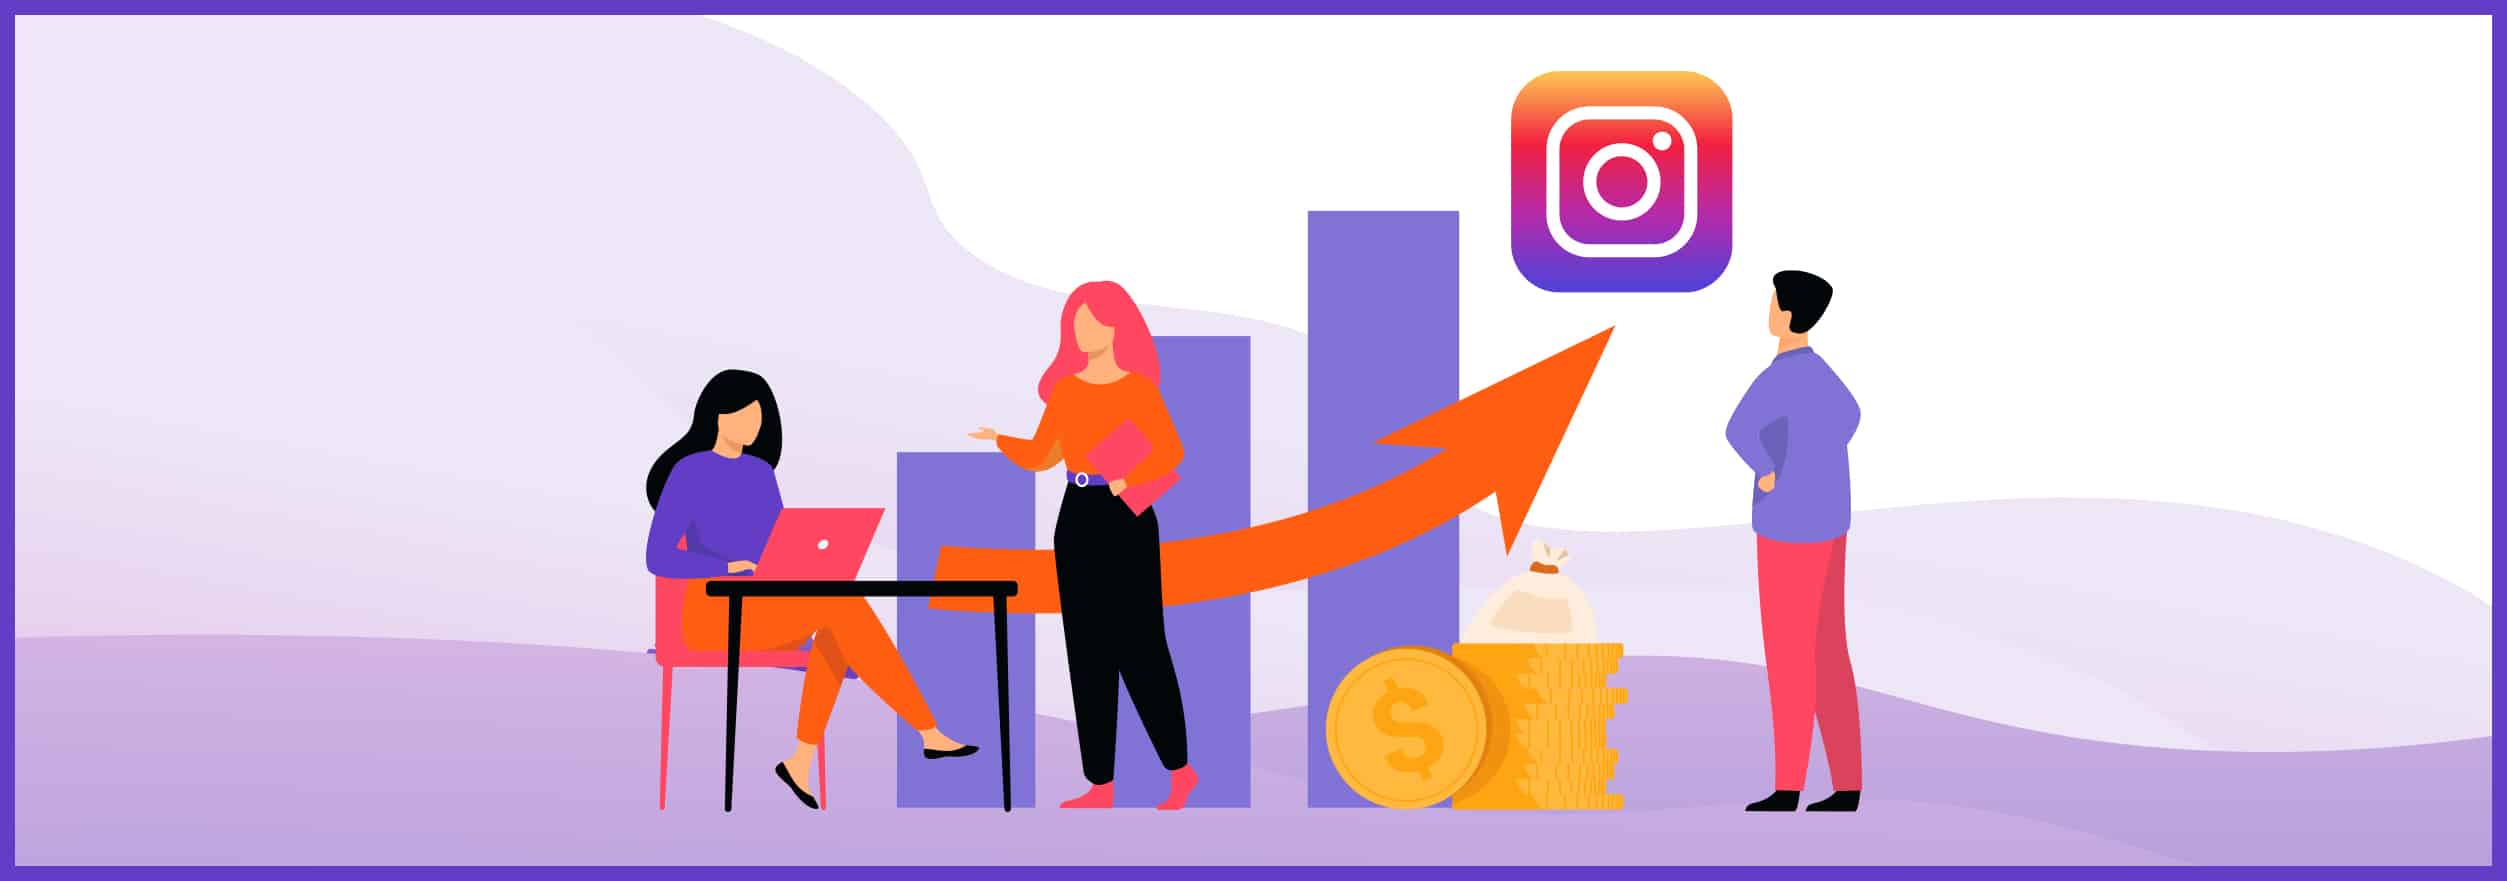 steps towards achieving Instagram success through essential growth hacks